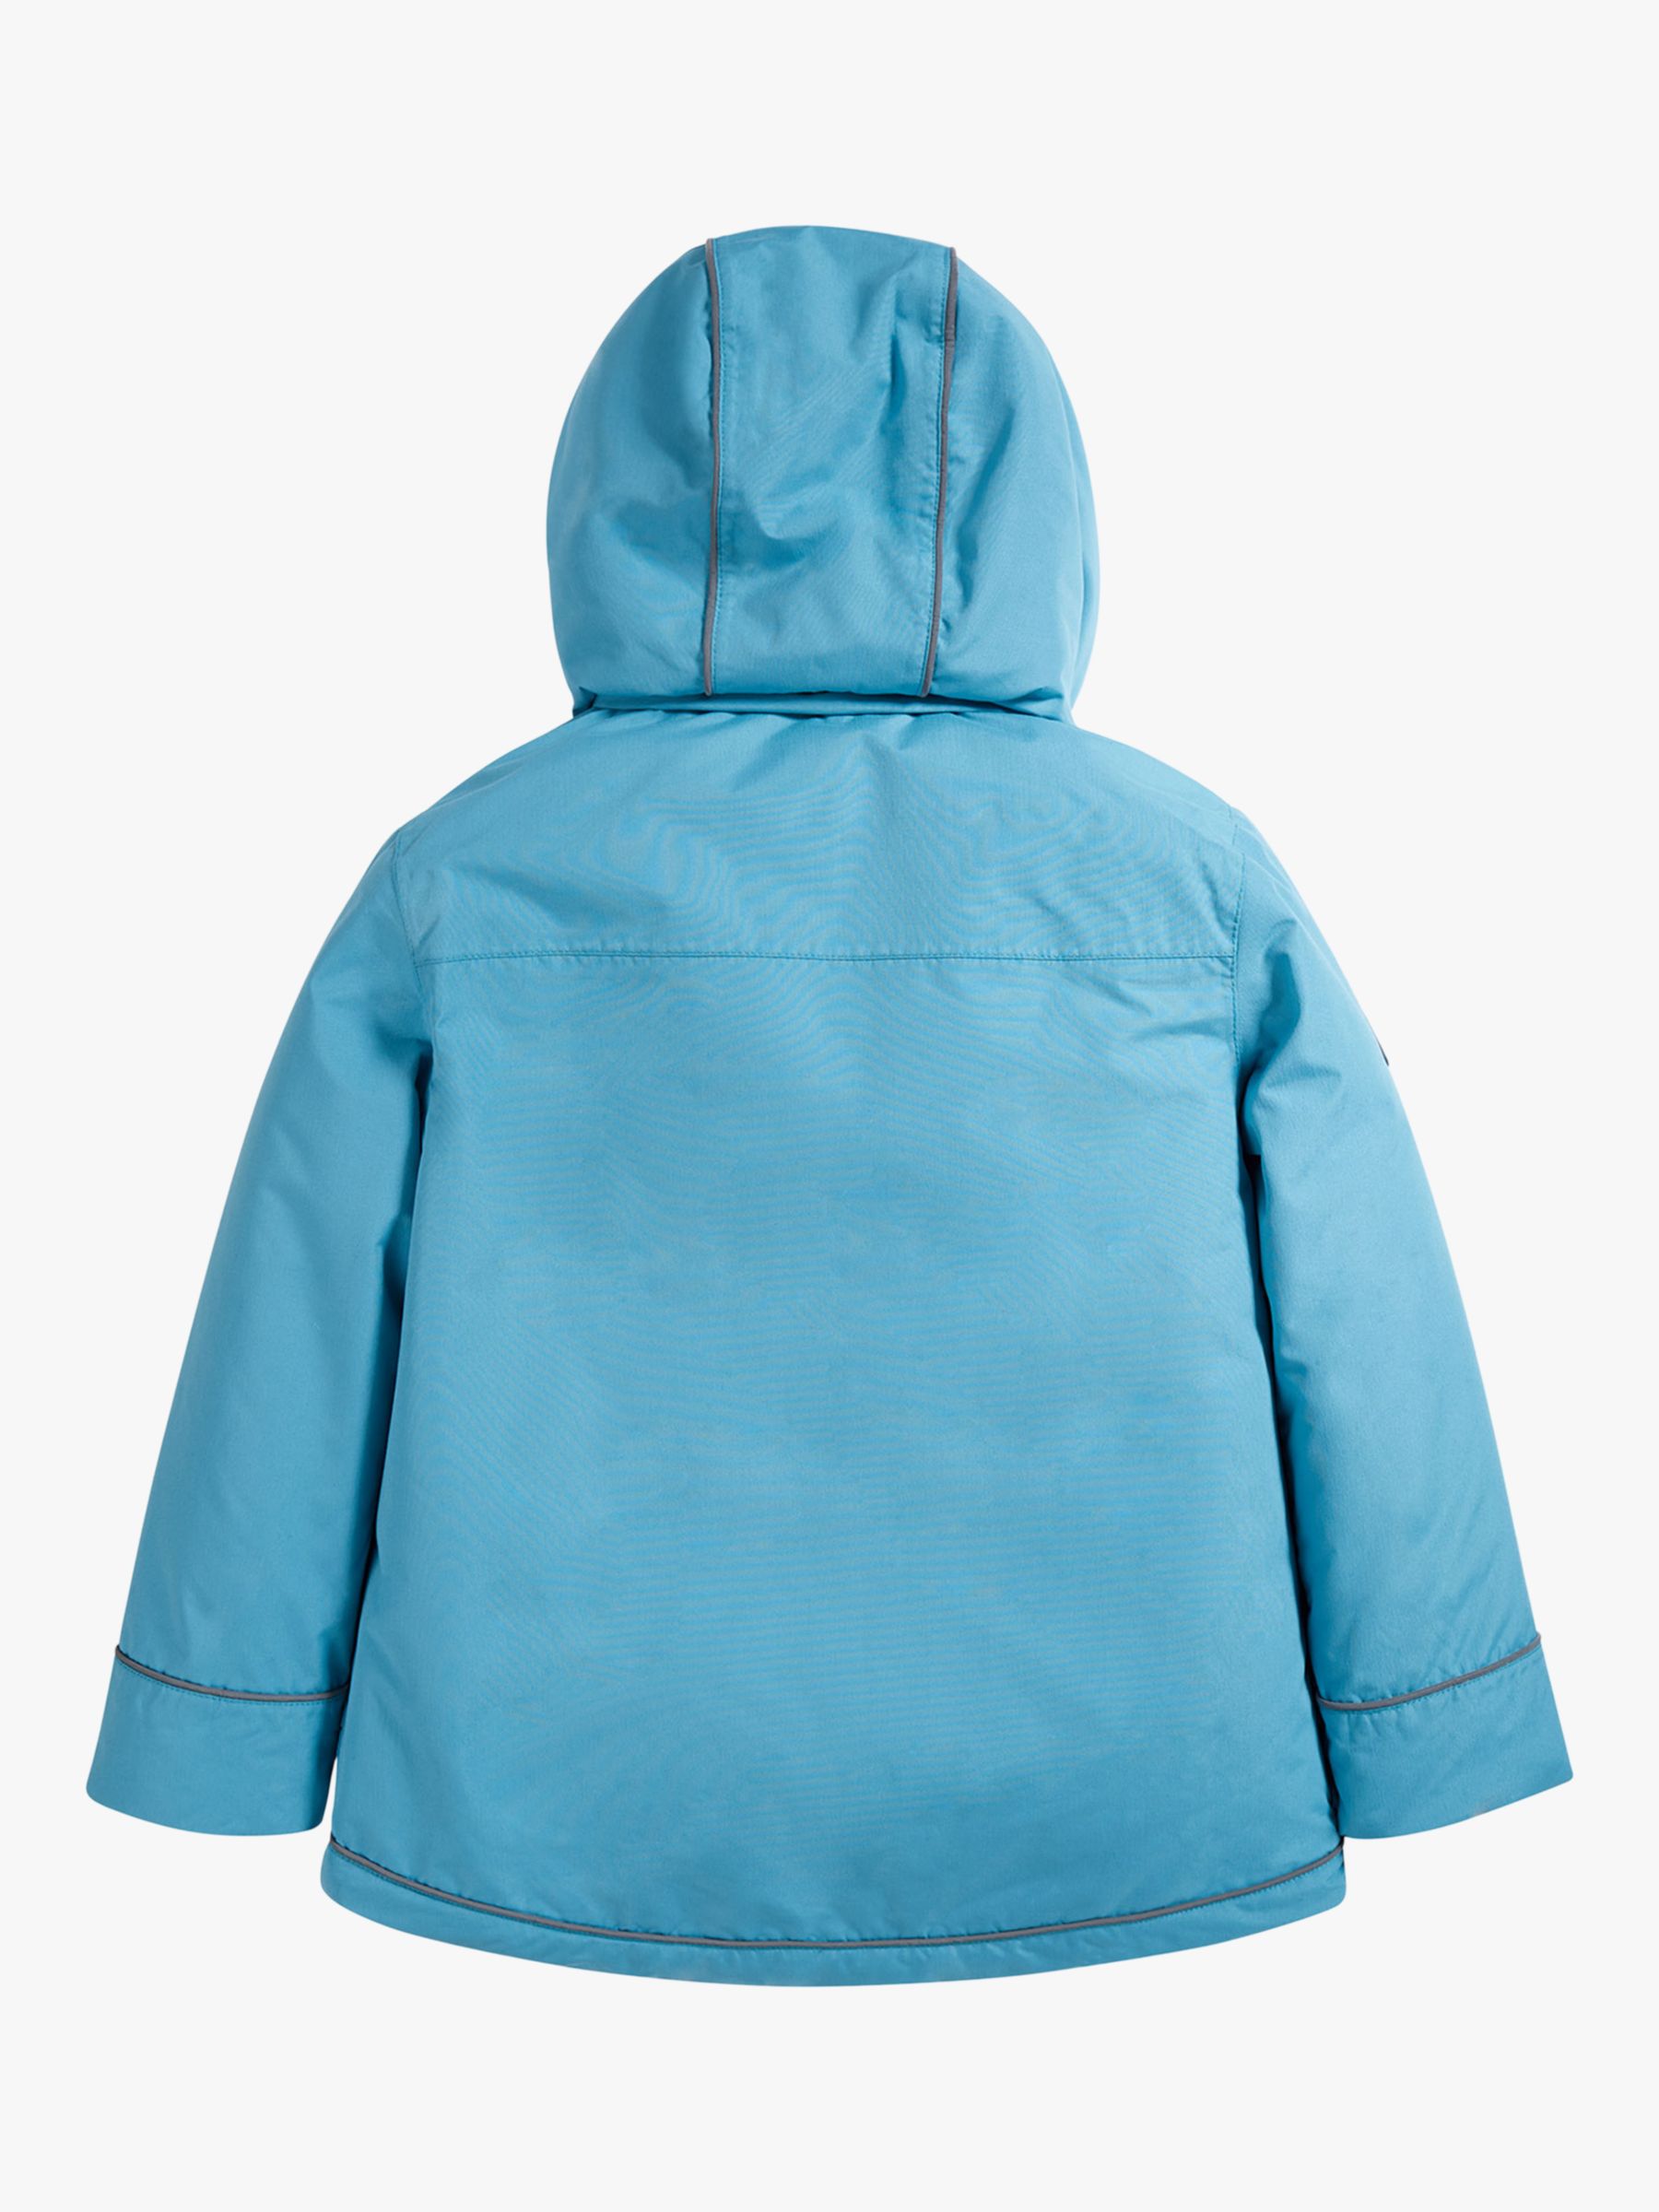 Frugi Kids' Rambler 3 in 1 Coat, Tor Blue/Multi, 1-2 years